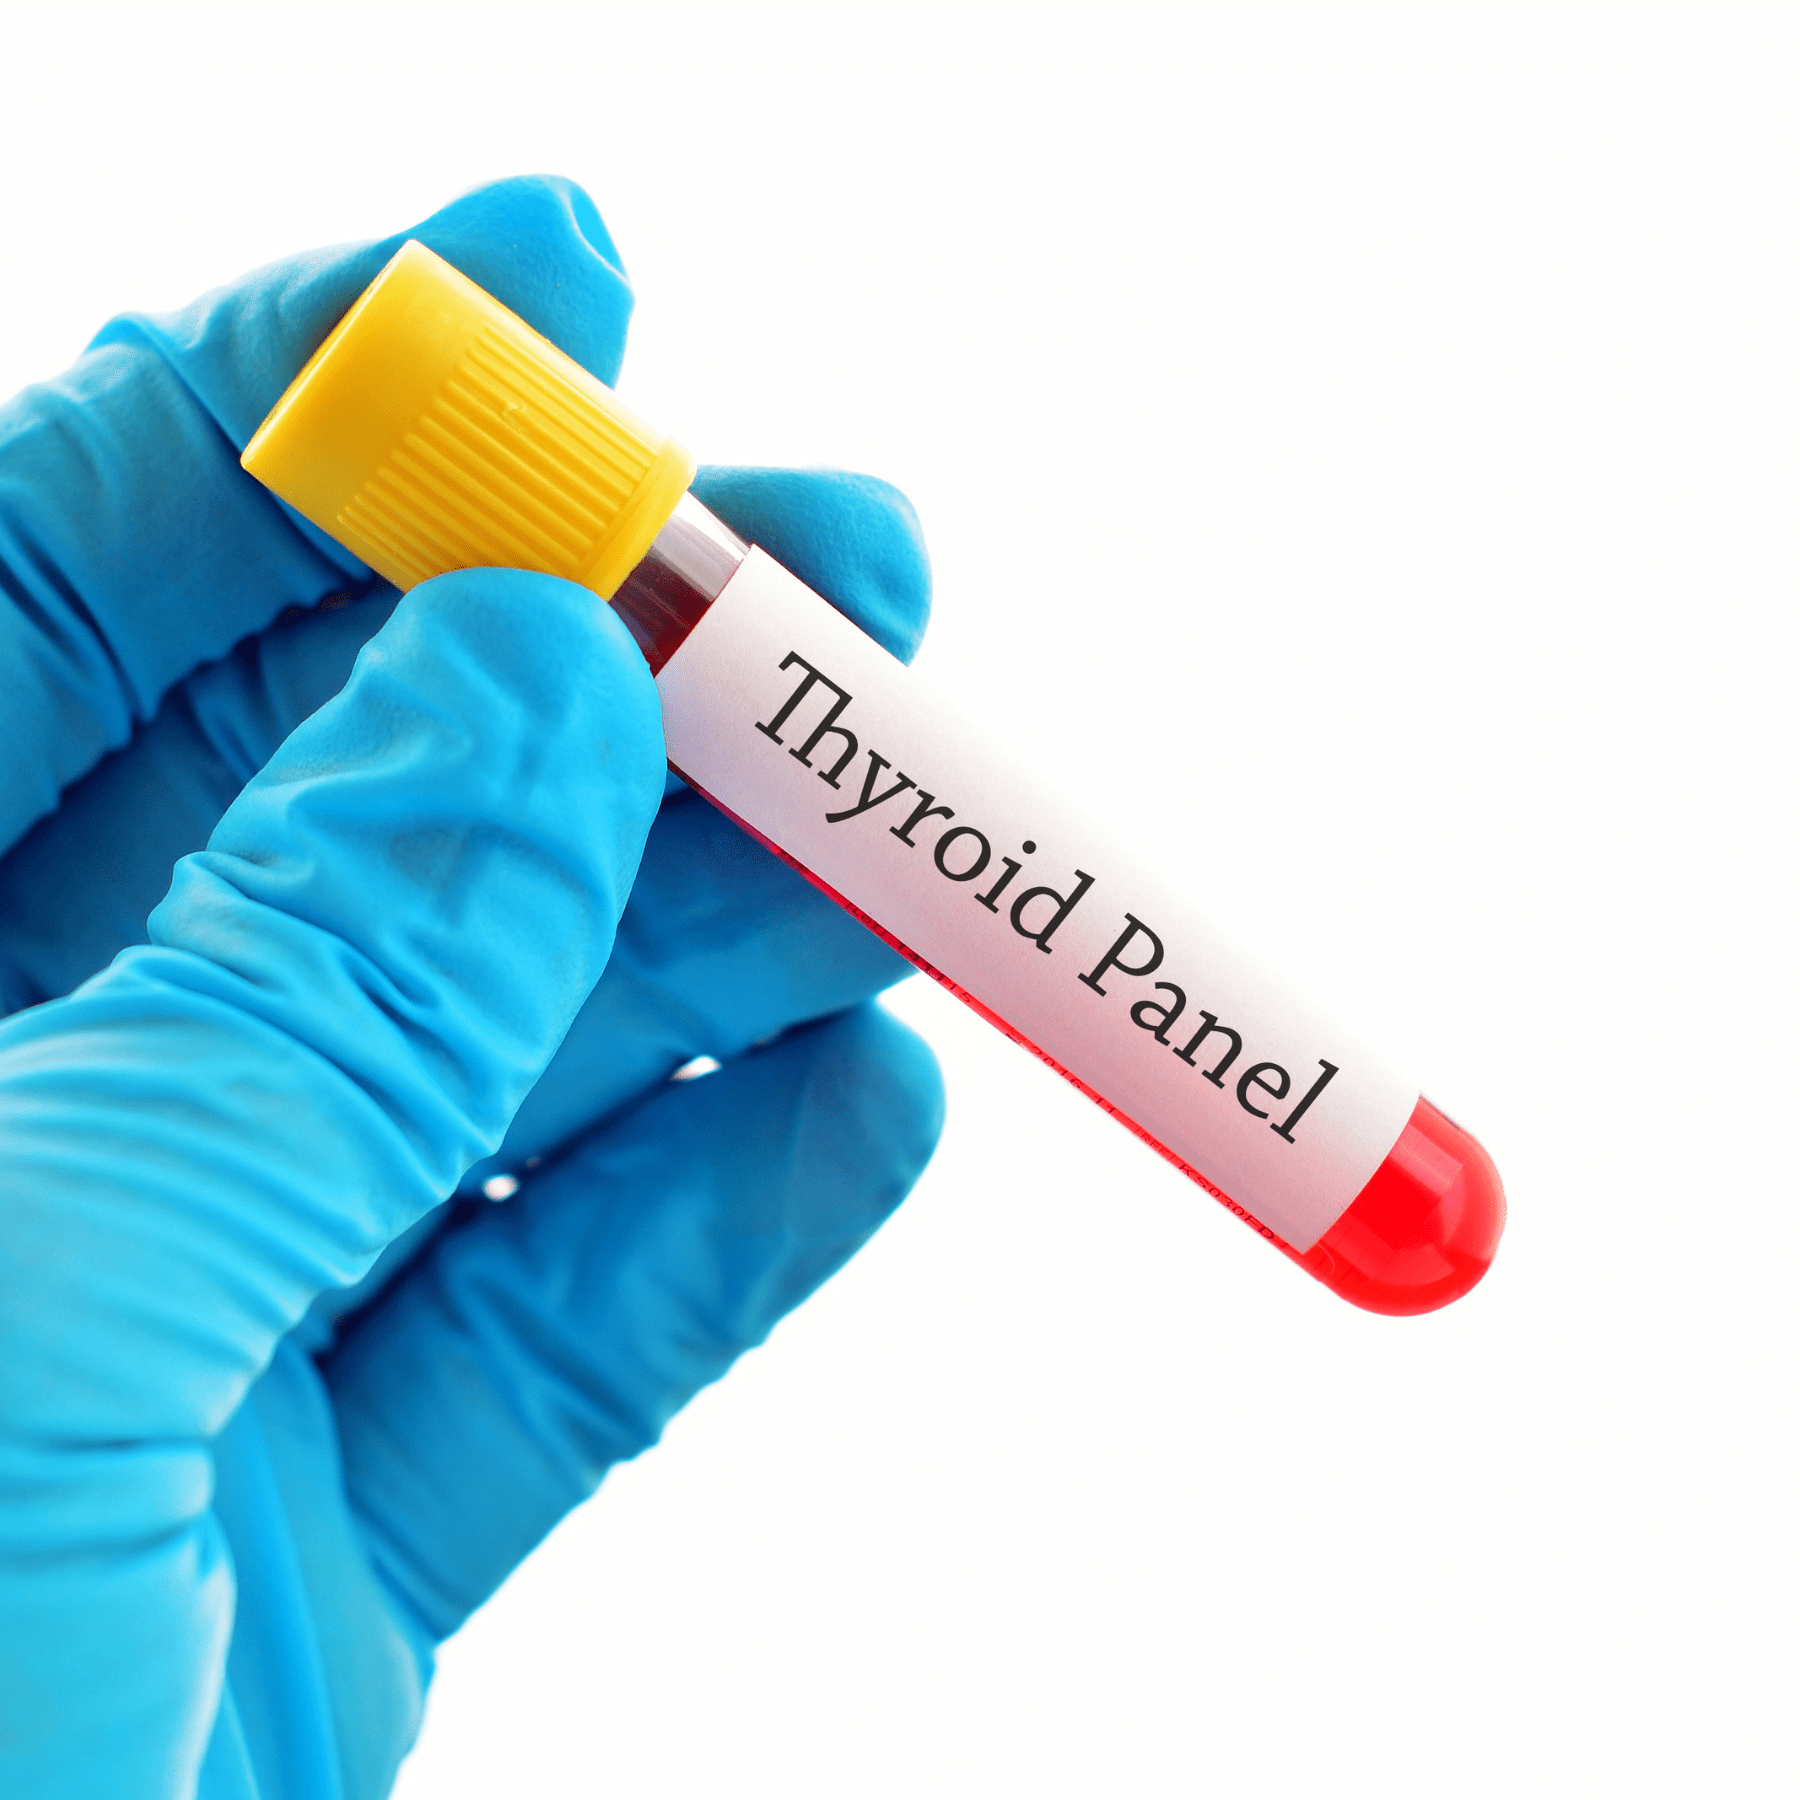 Thyroid test pic